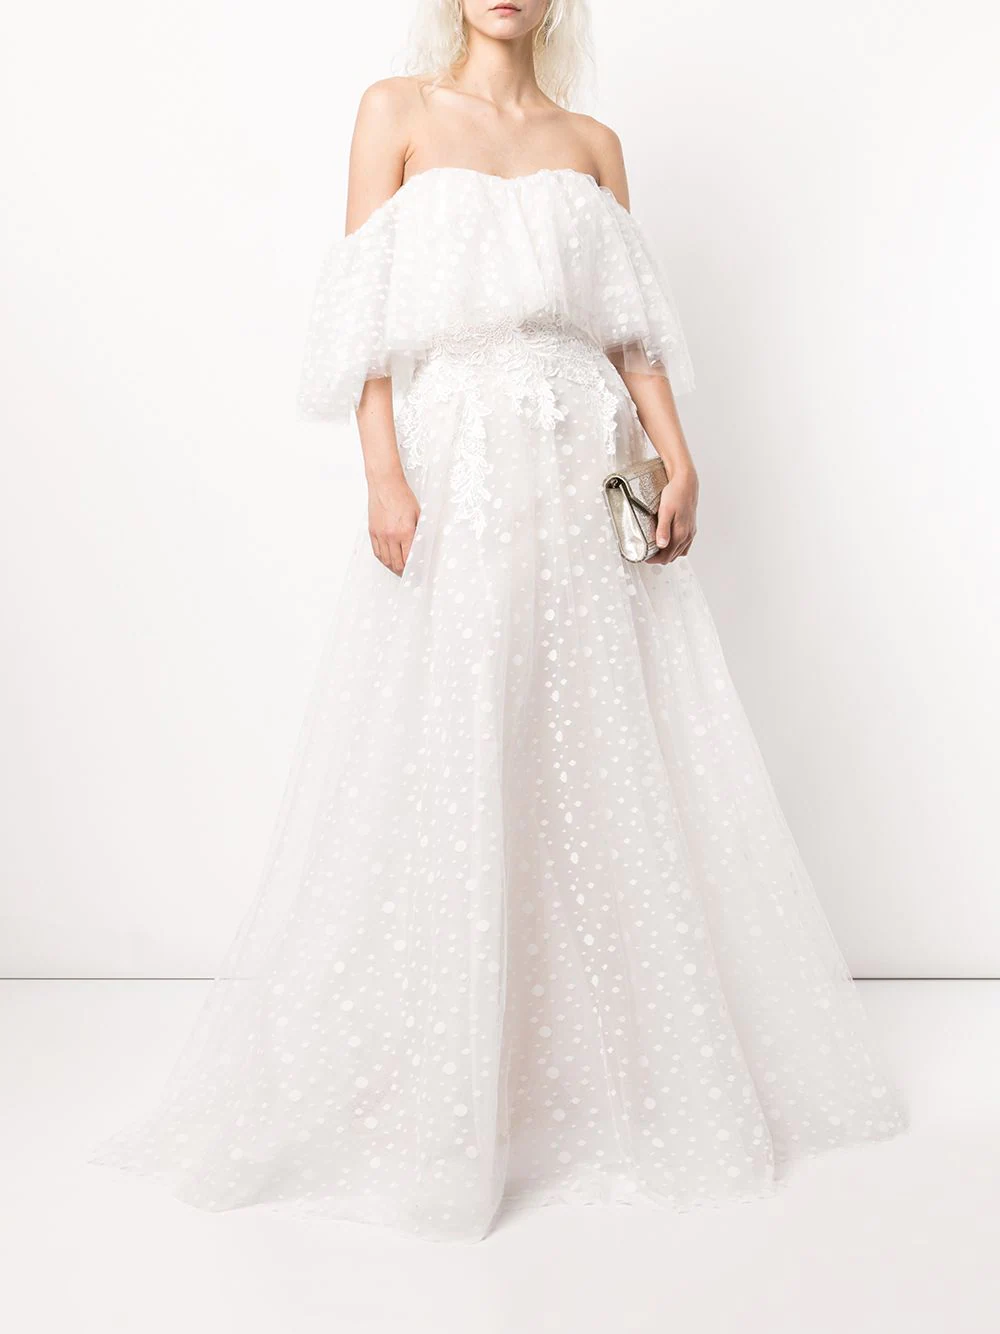 10 eshops où acheter sa robe de mariée - Blog Mariage Madame C